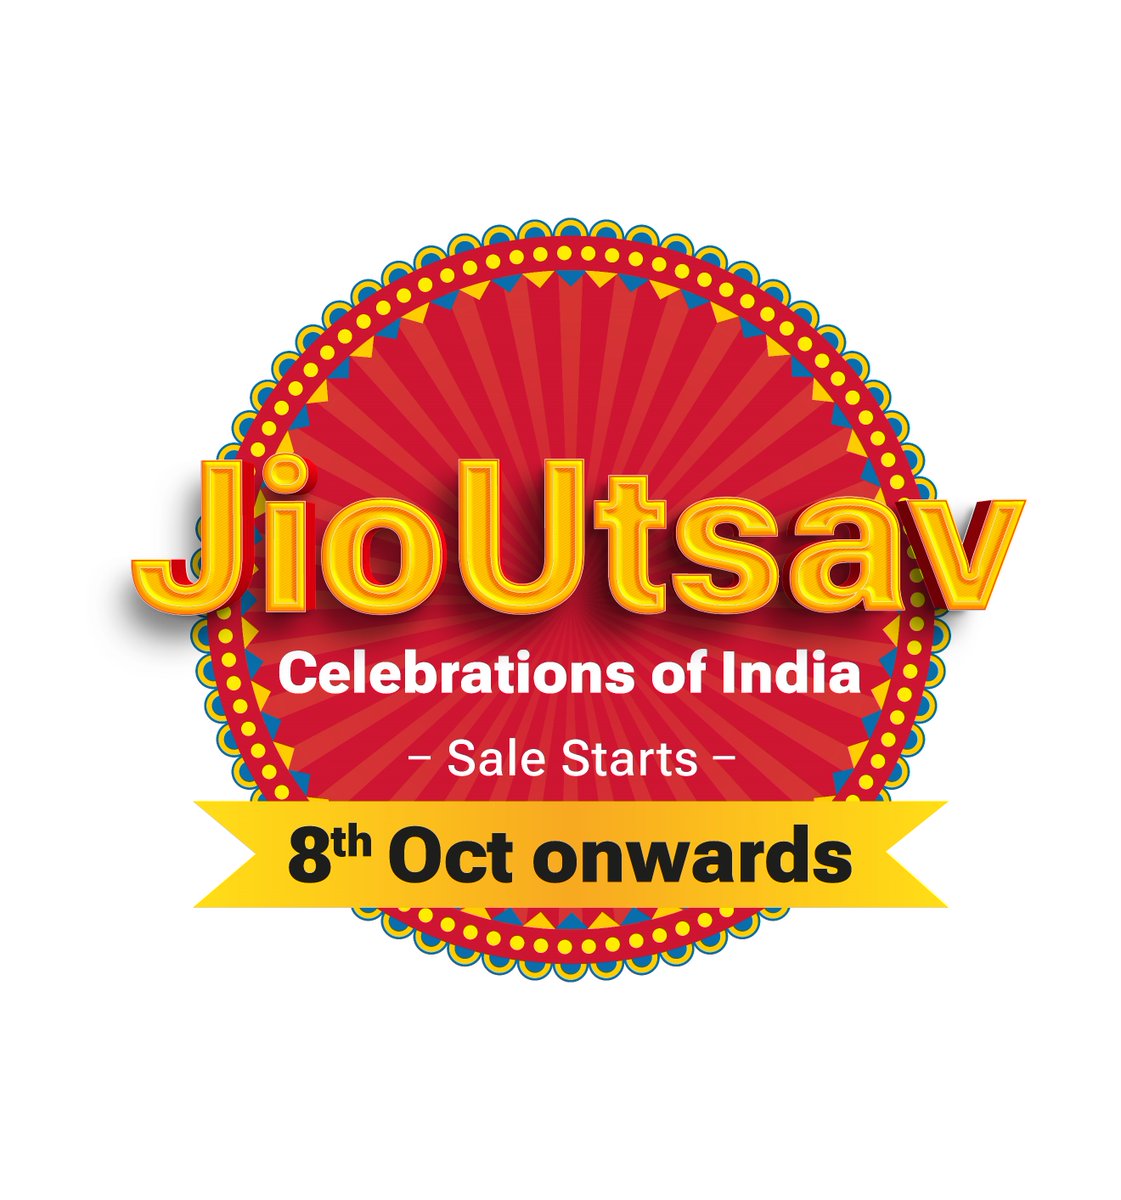 JioMart’s JioUtsav – Celebrations Of India sale starts on October 8